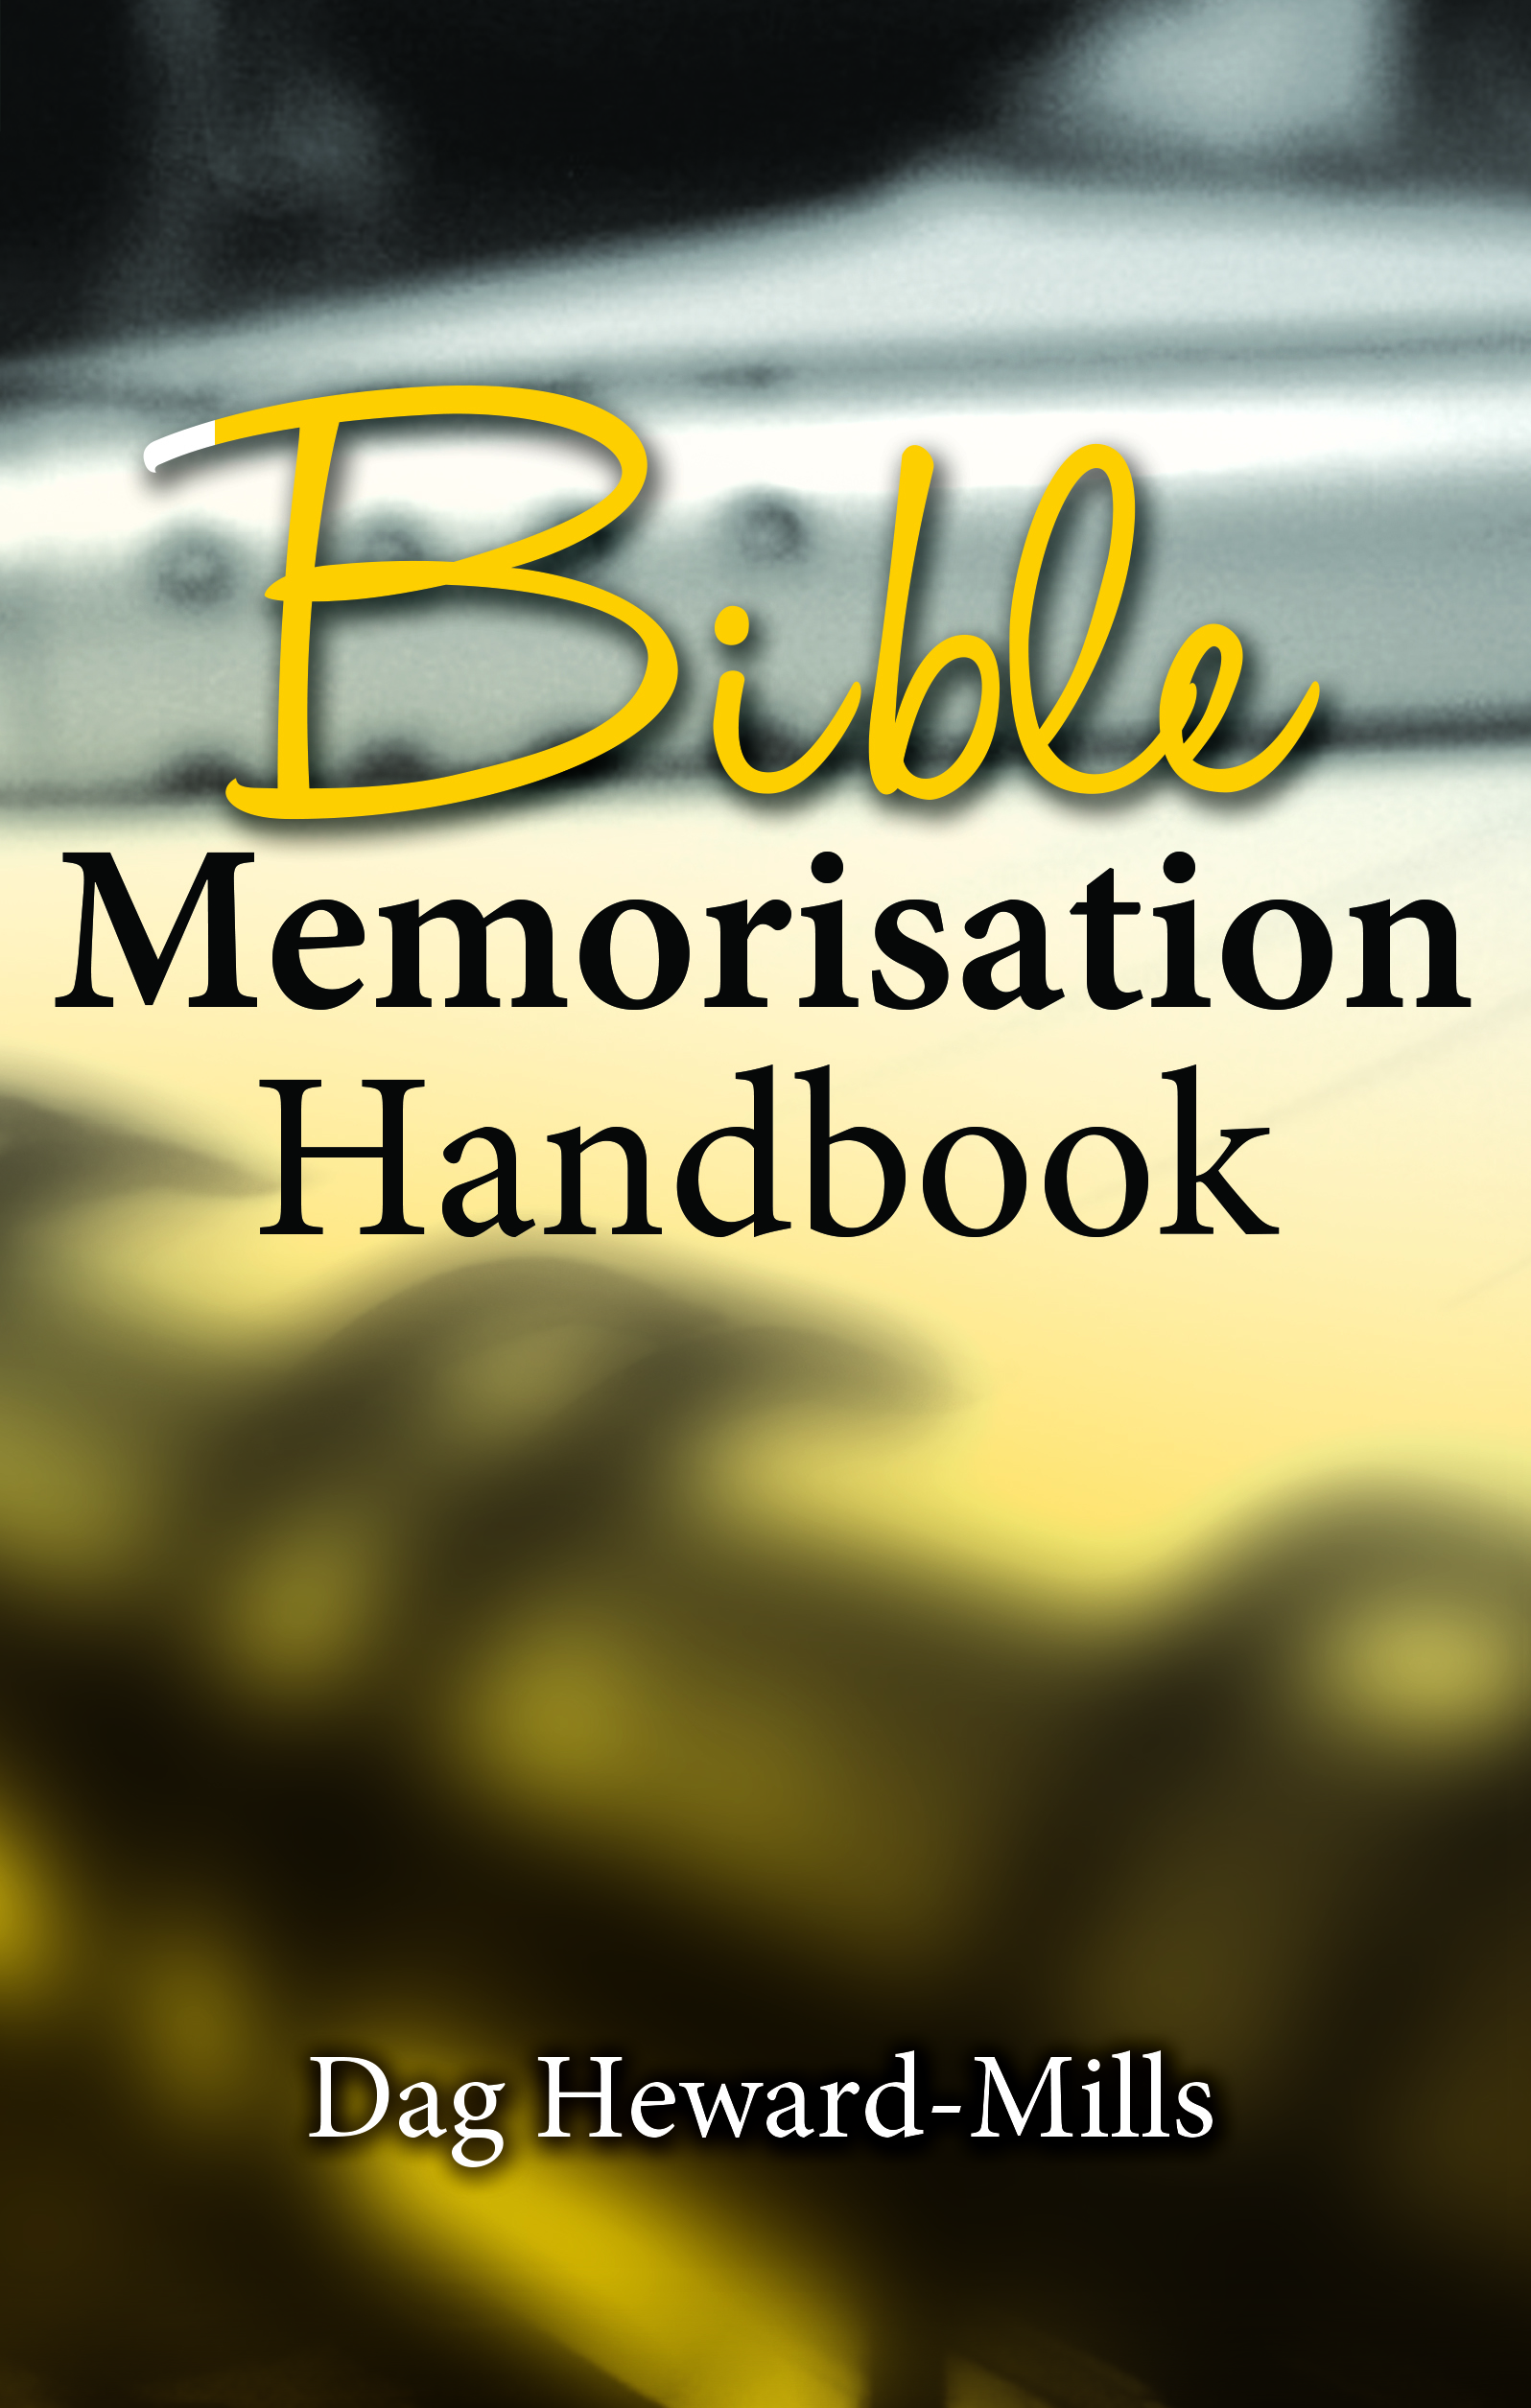 Bible Memorization Handbook by Dag Heward-Mills